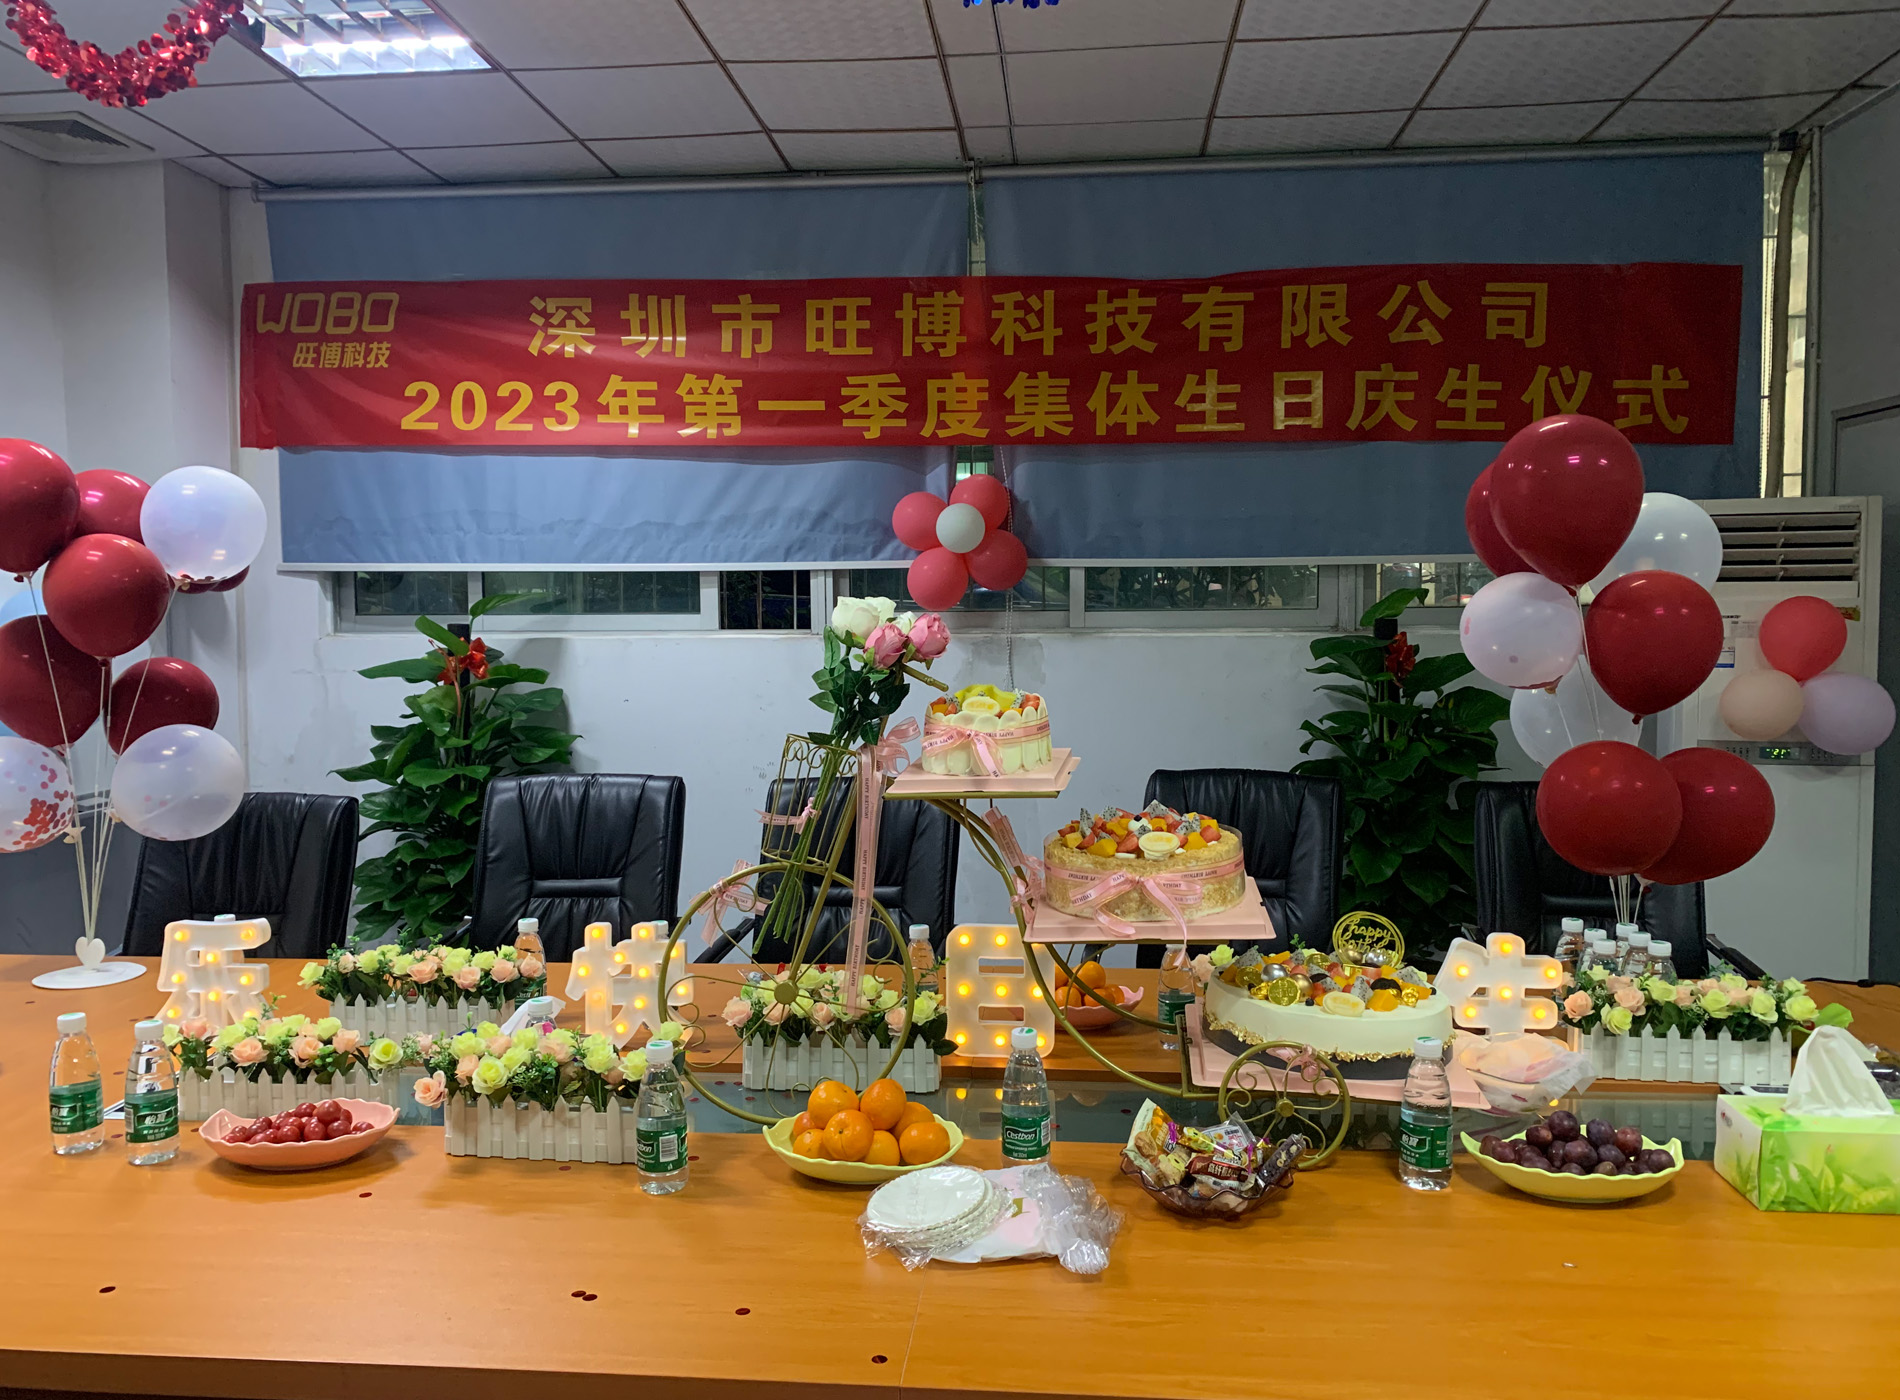 Wangbo The first season Staffs Birthday Party of 2023